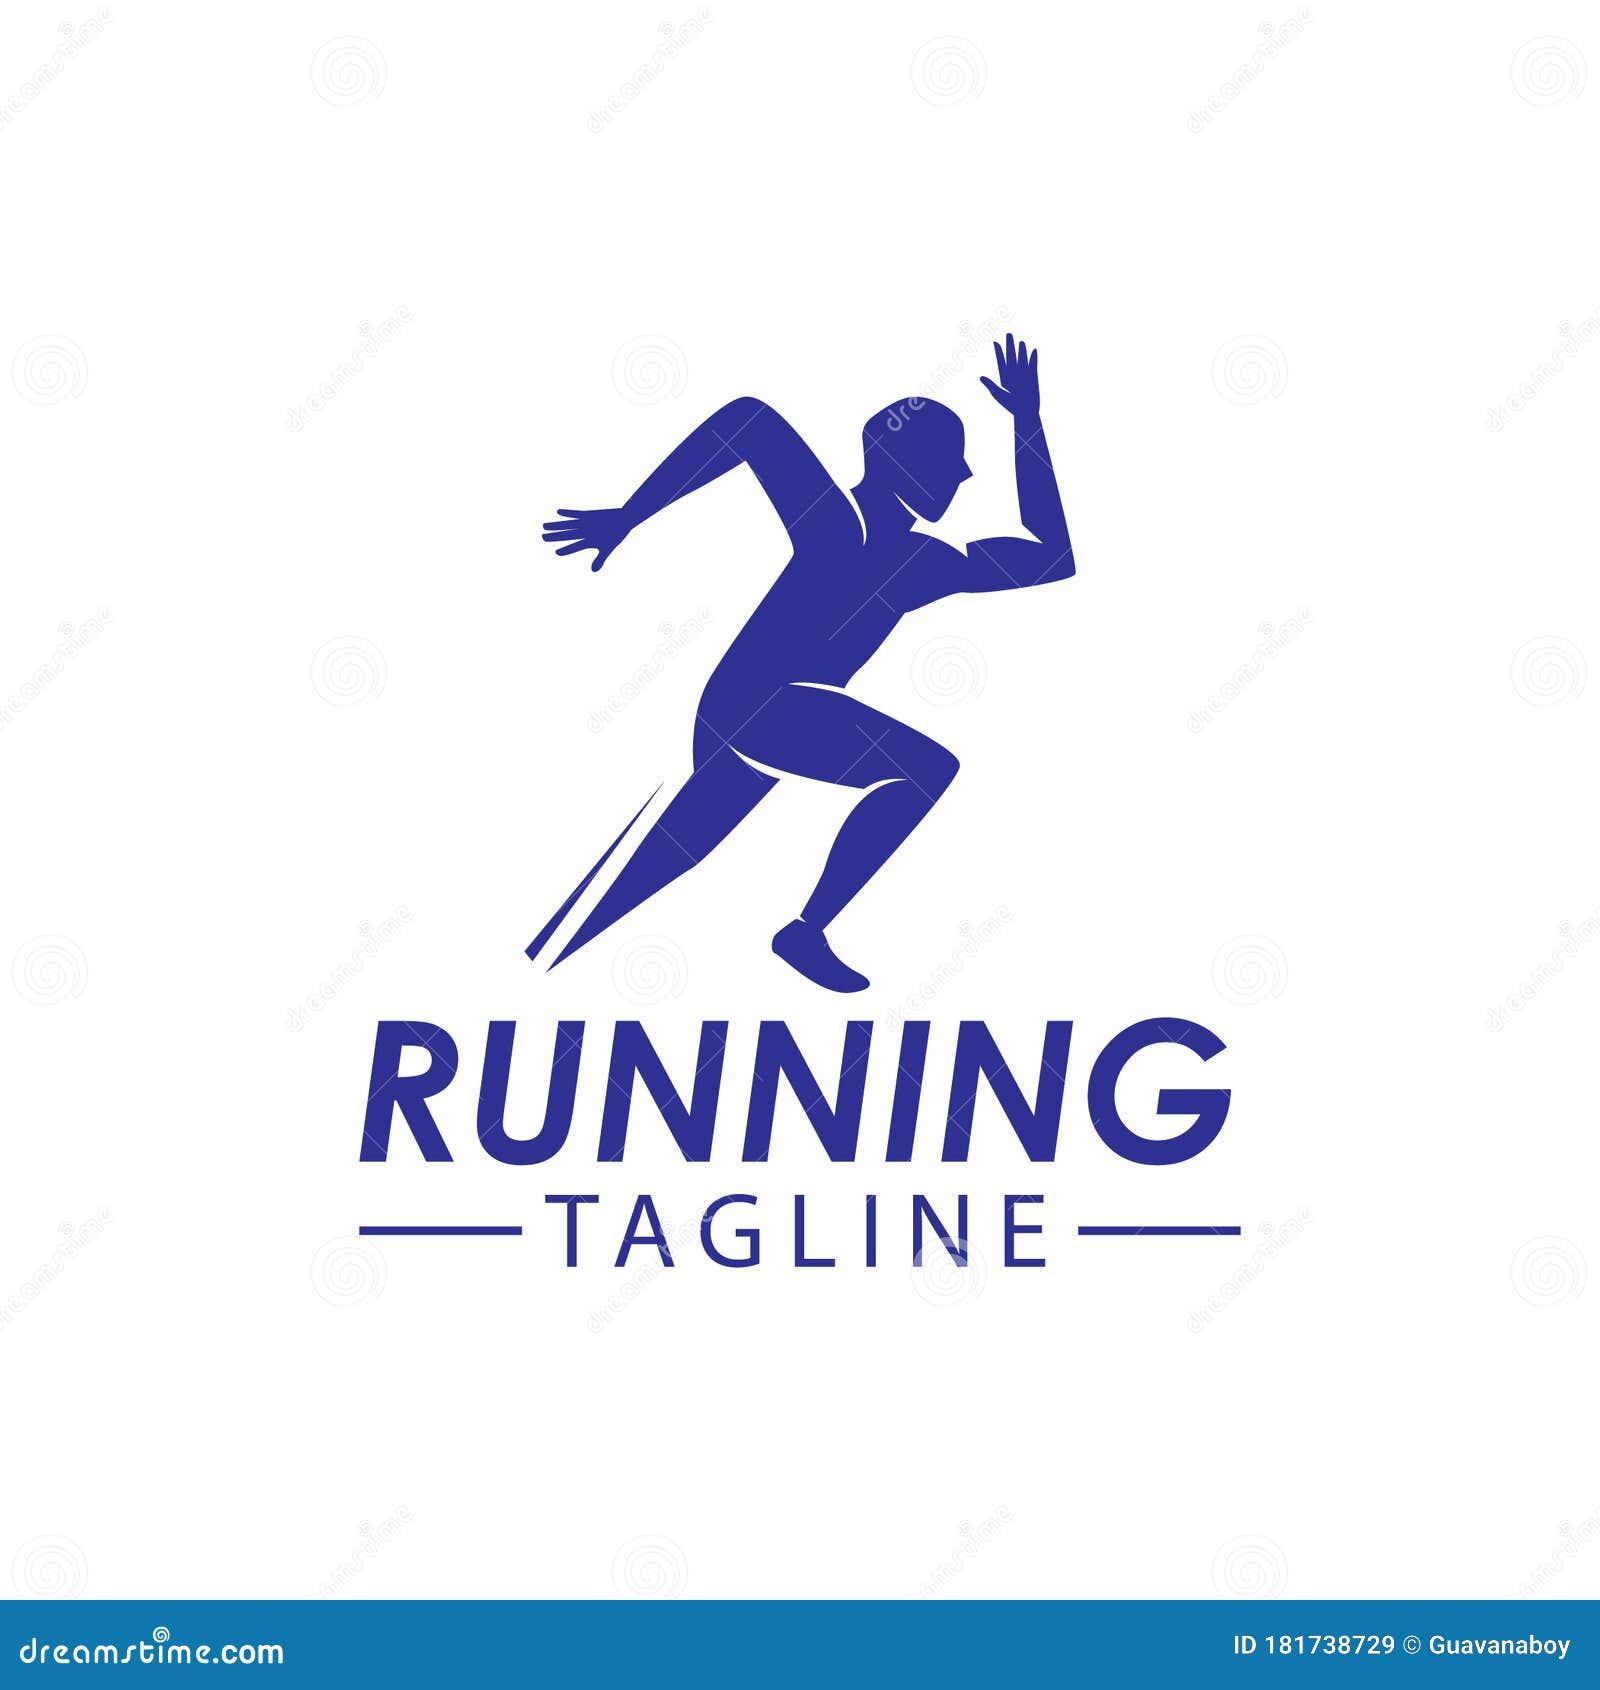 Running Sprint Jogging Minimalist Athletics Logo Design Template Vector ...